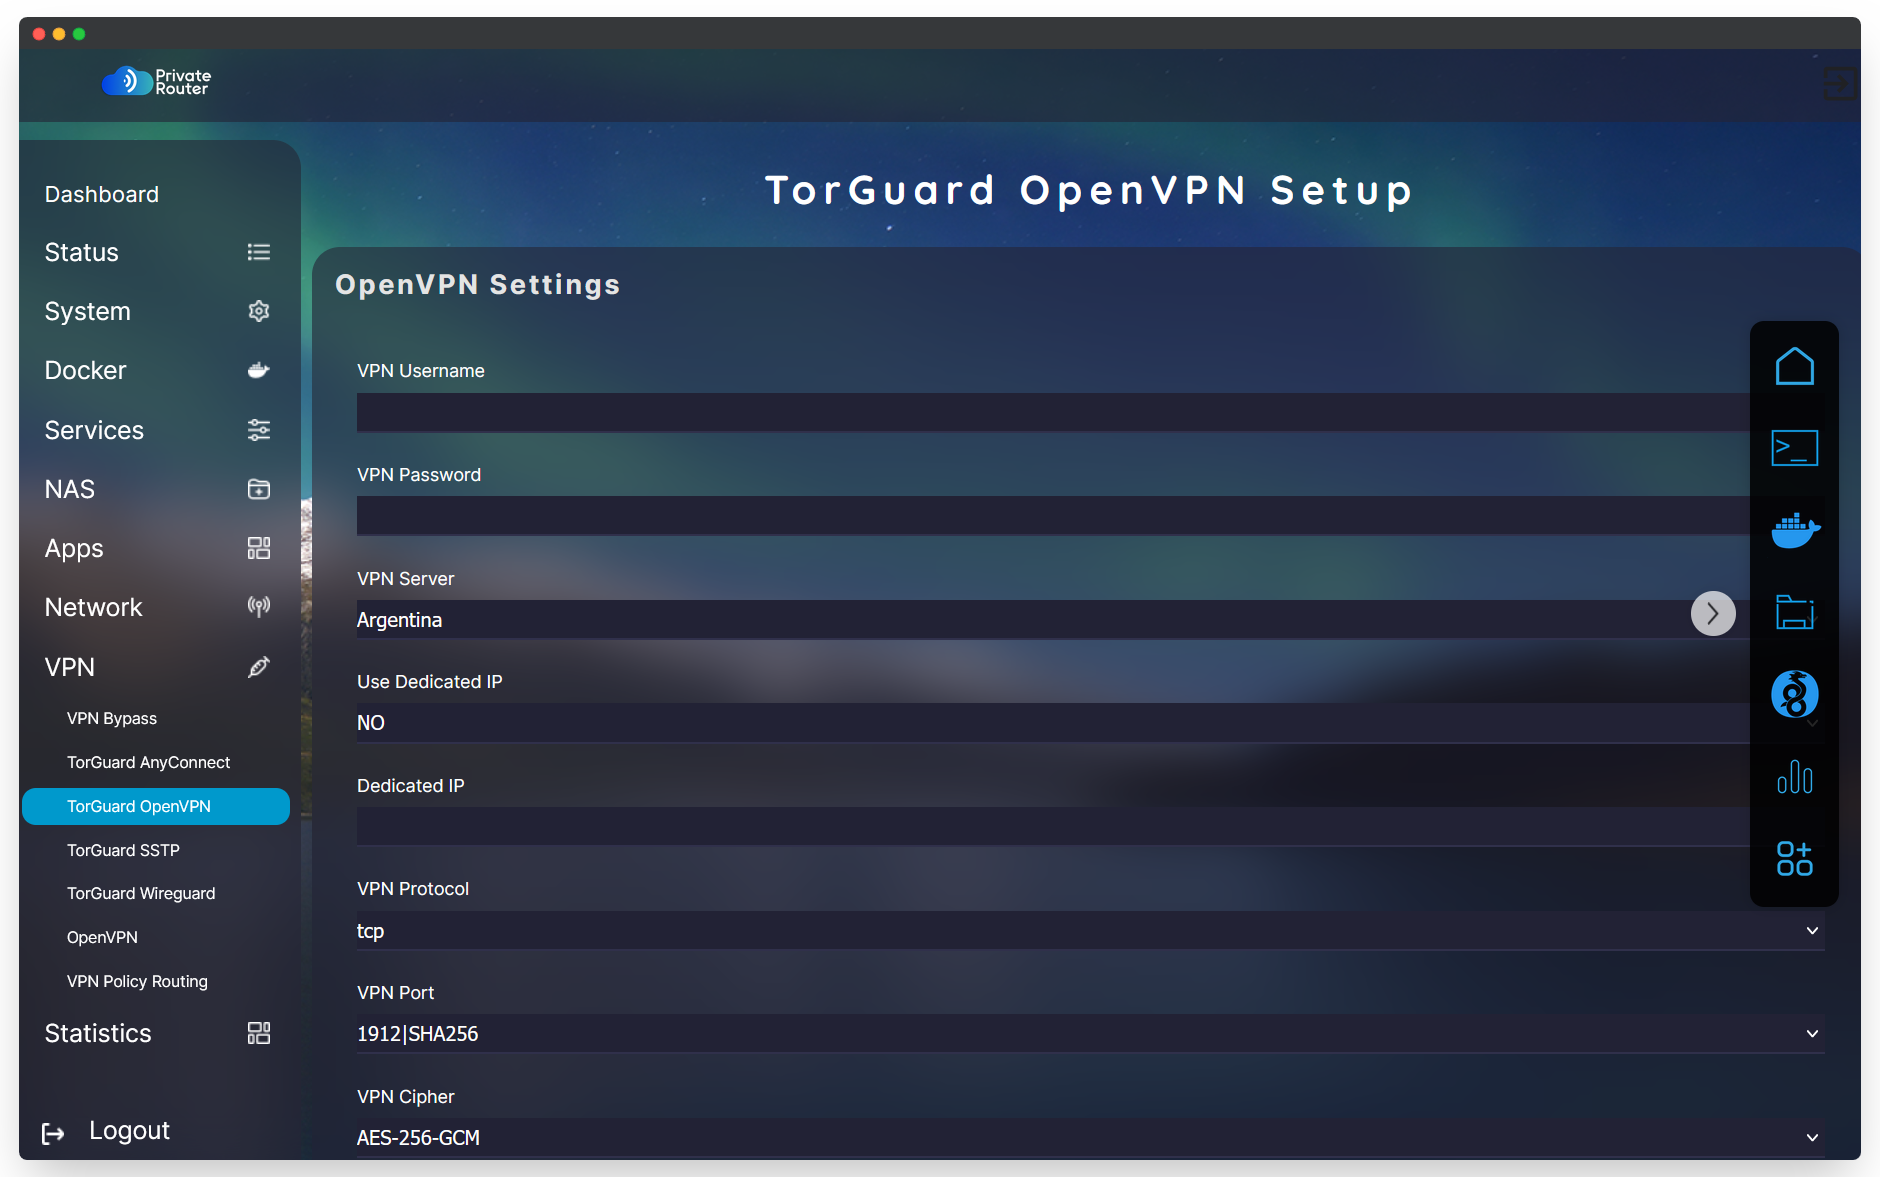 Built in TorGuard OpenVPN Support